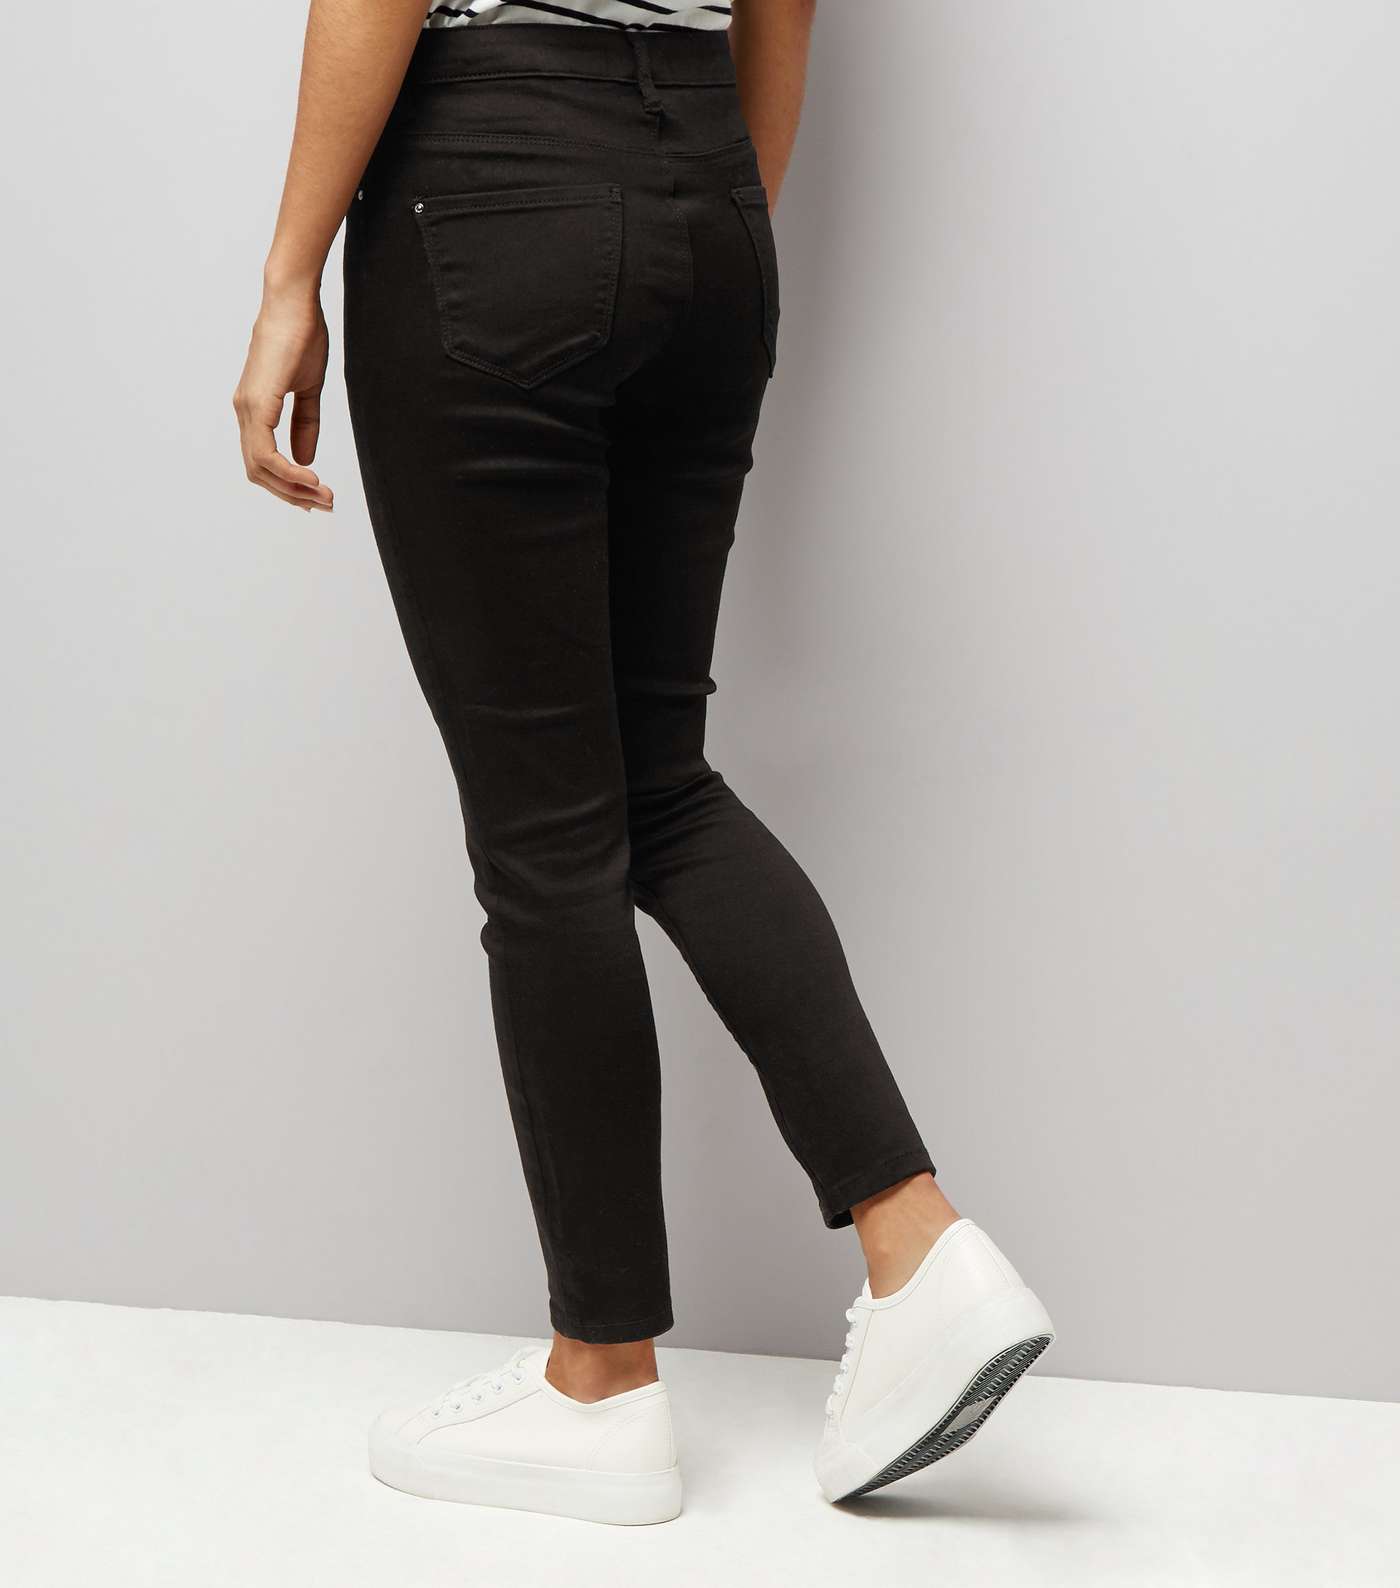 Petite Black Super Soft Super Skinny India Jeans Image 3